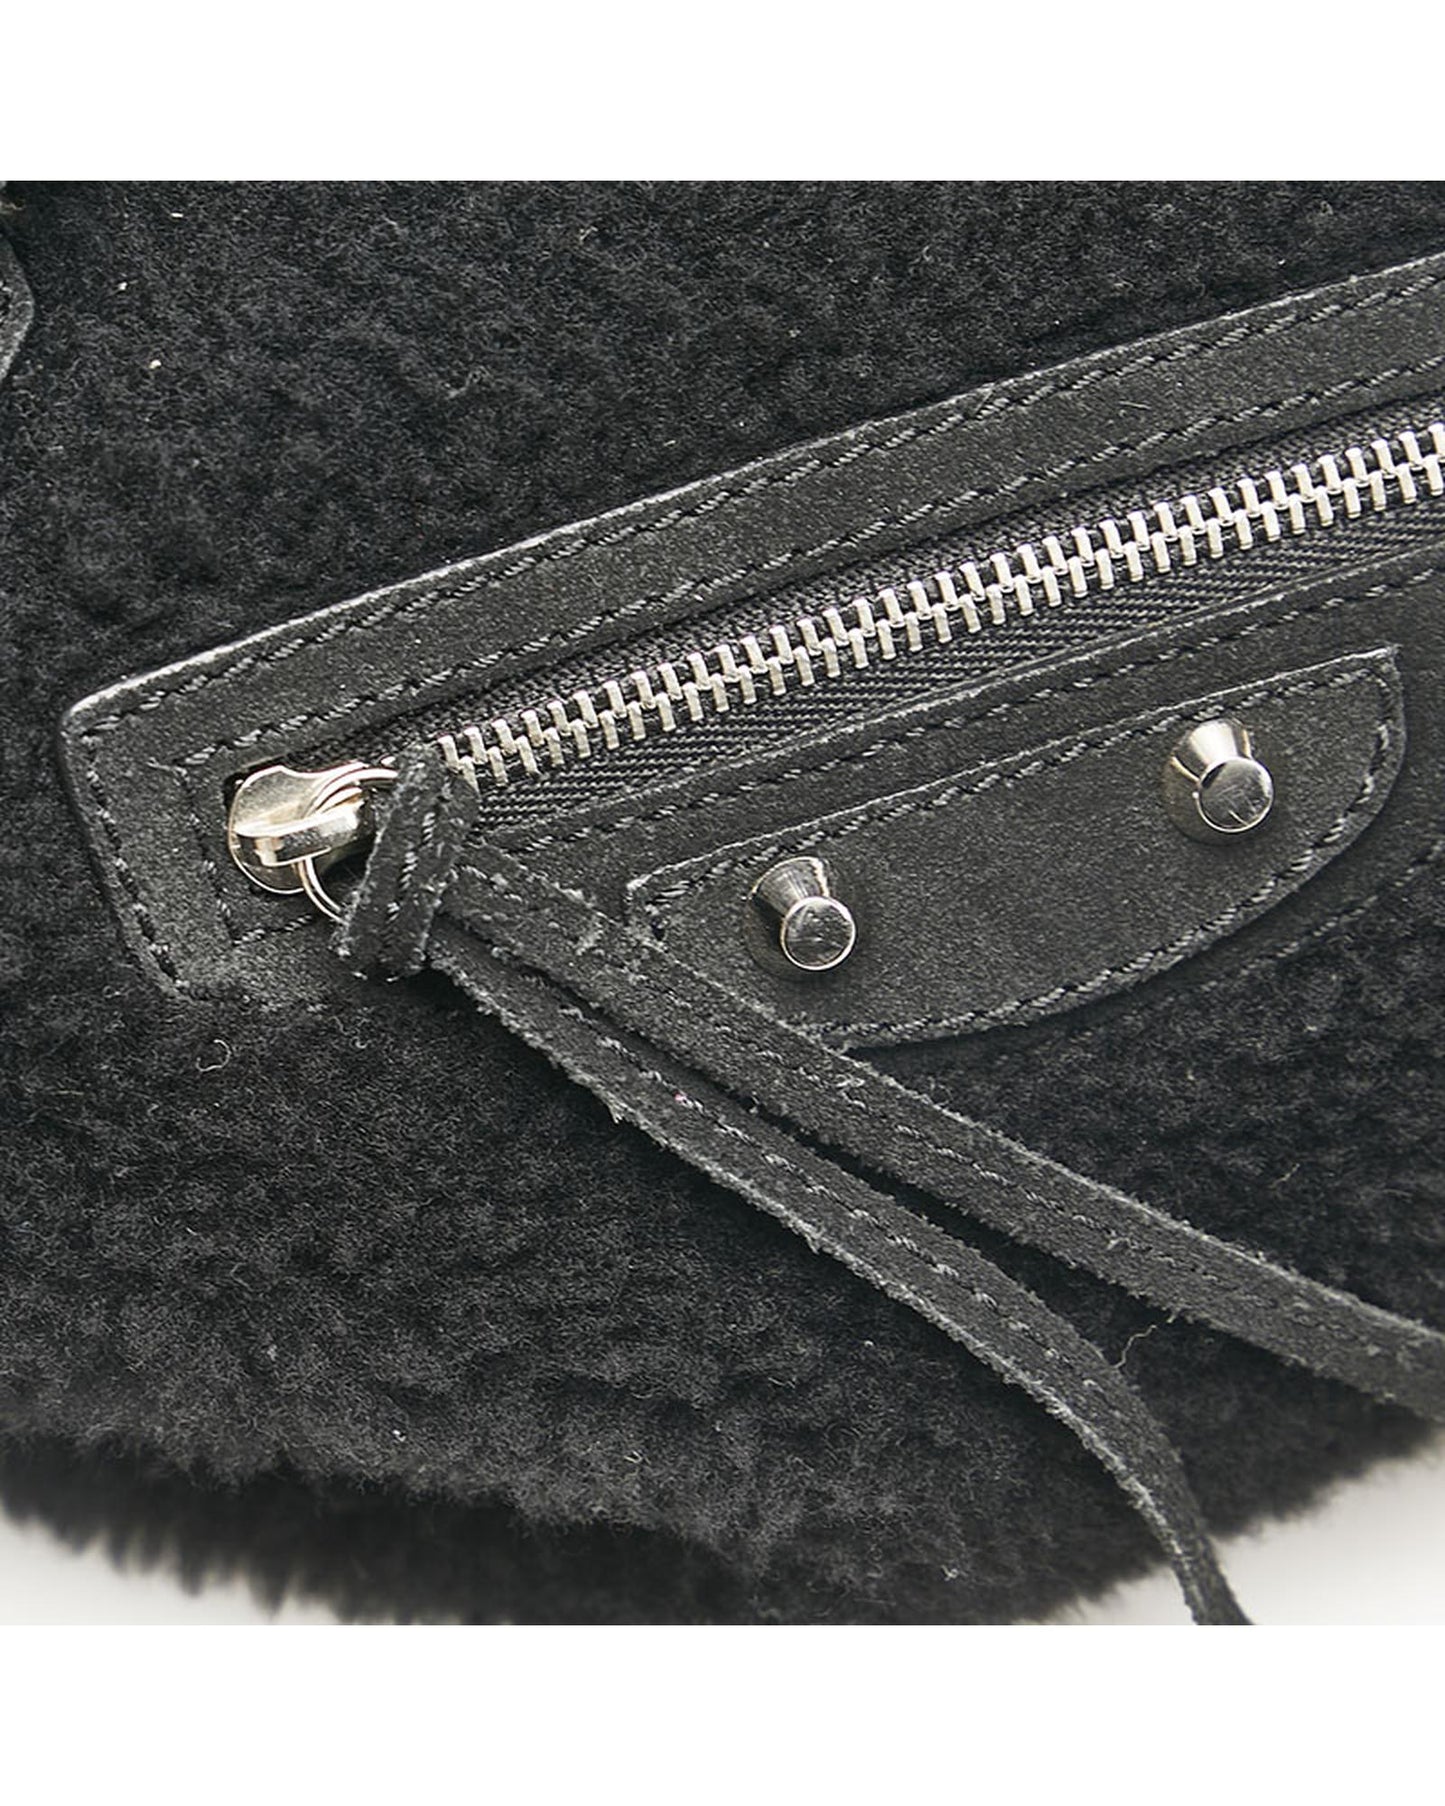 Balenciaga Women's Shearling Papier Tote Bag in Black in Black